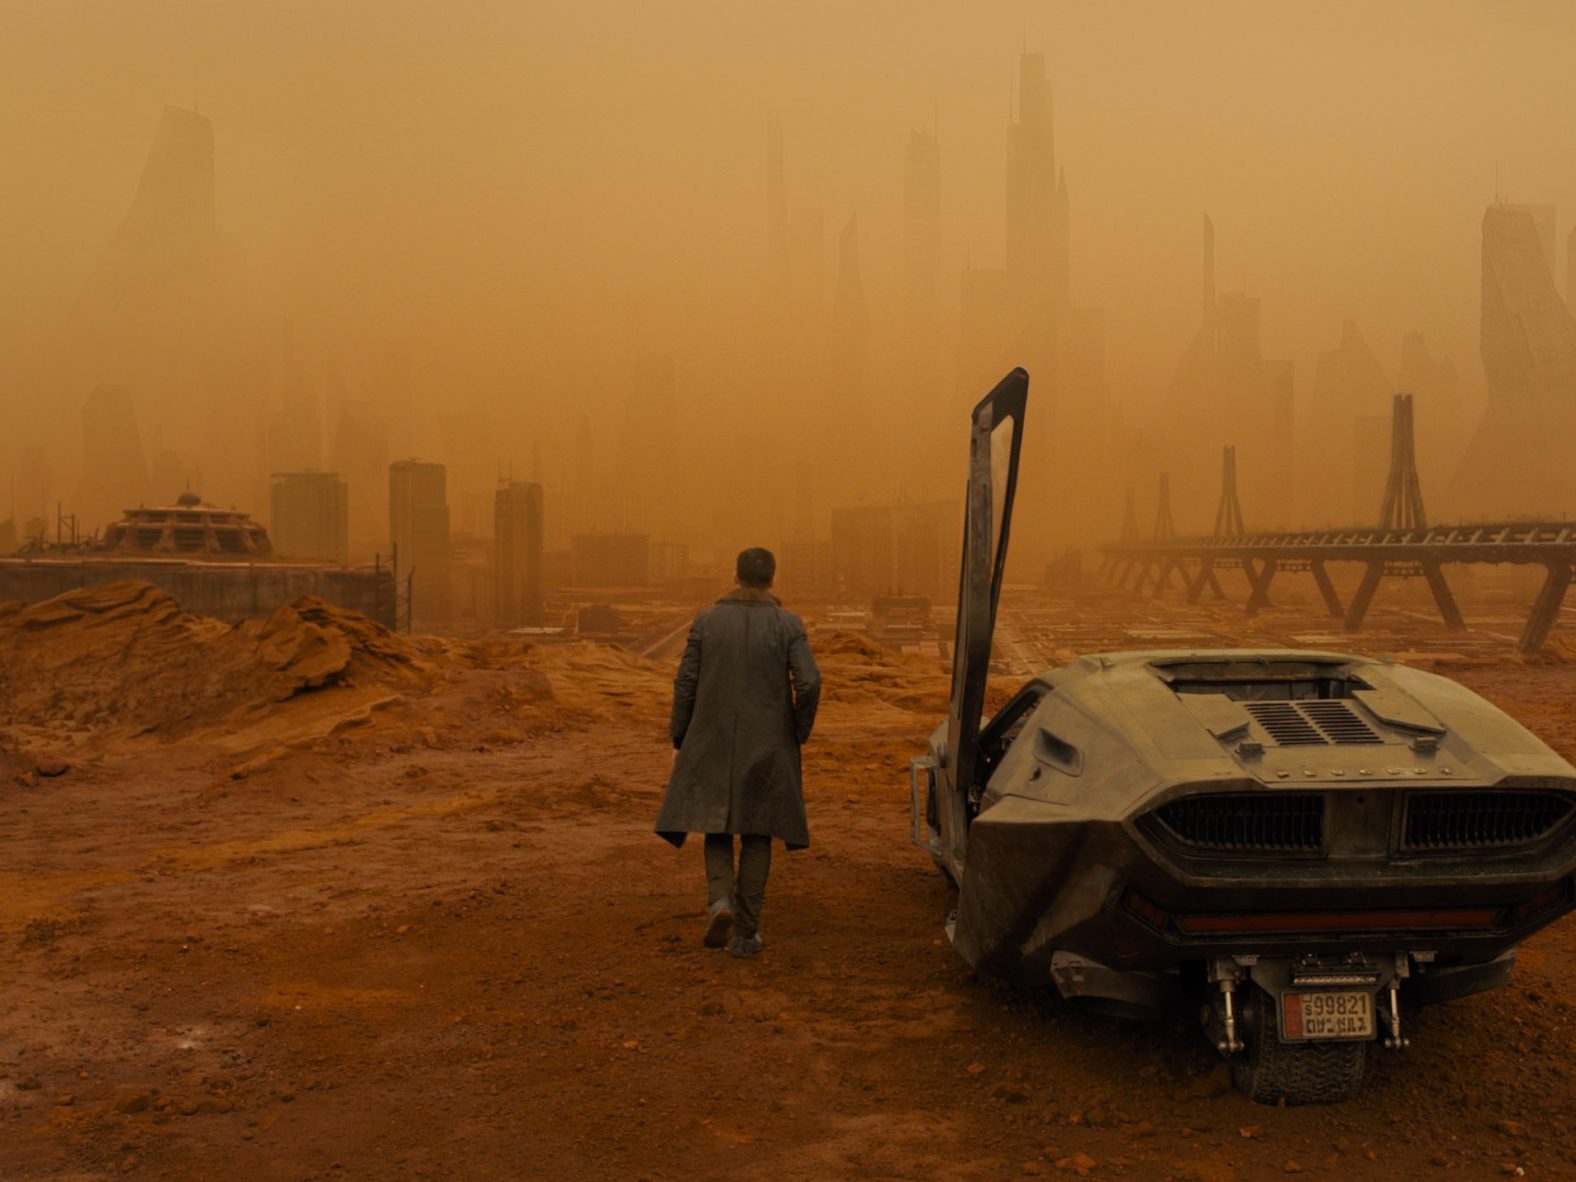 Movie review: 'Blade Runner 2049